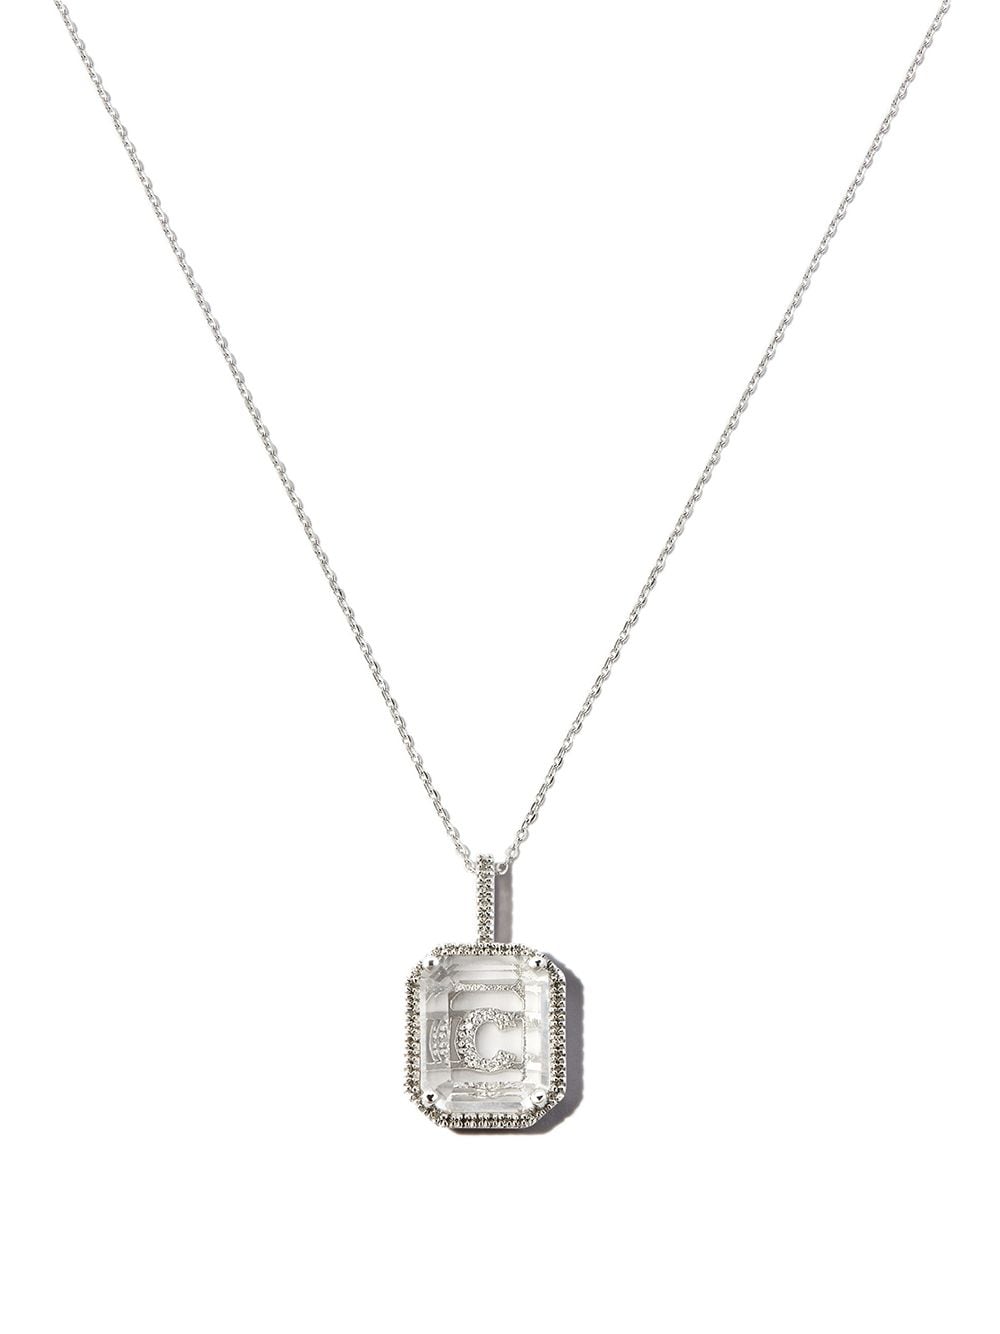 Mateo 14kt white gold C initial diamond pendant necklace - Silver von Mateo